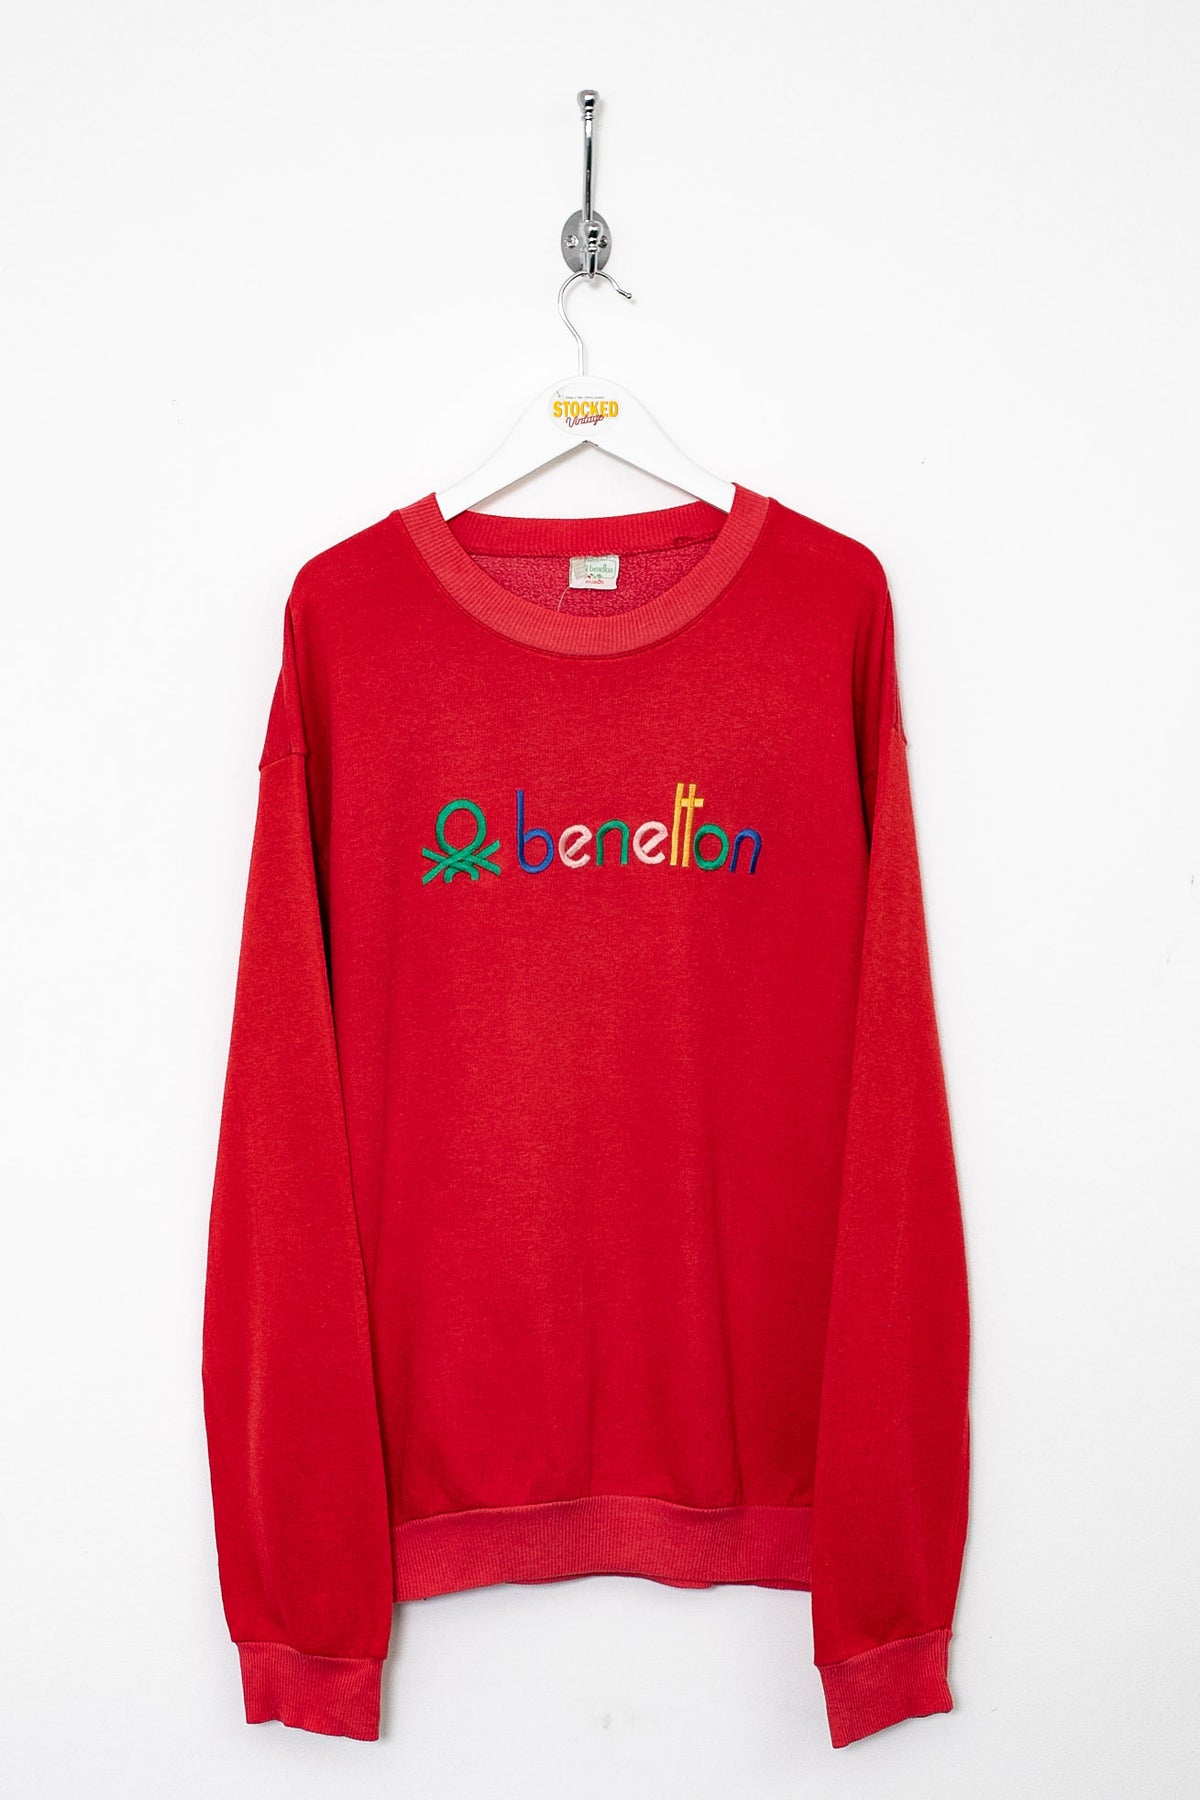 00s Benetton Sweatshirt (M)